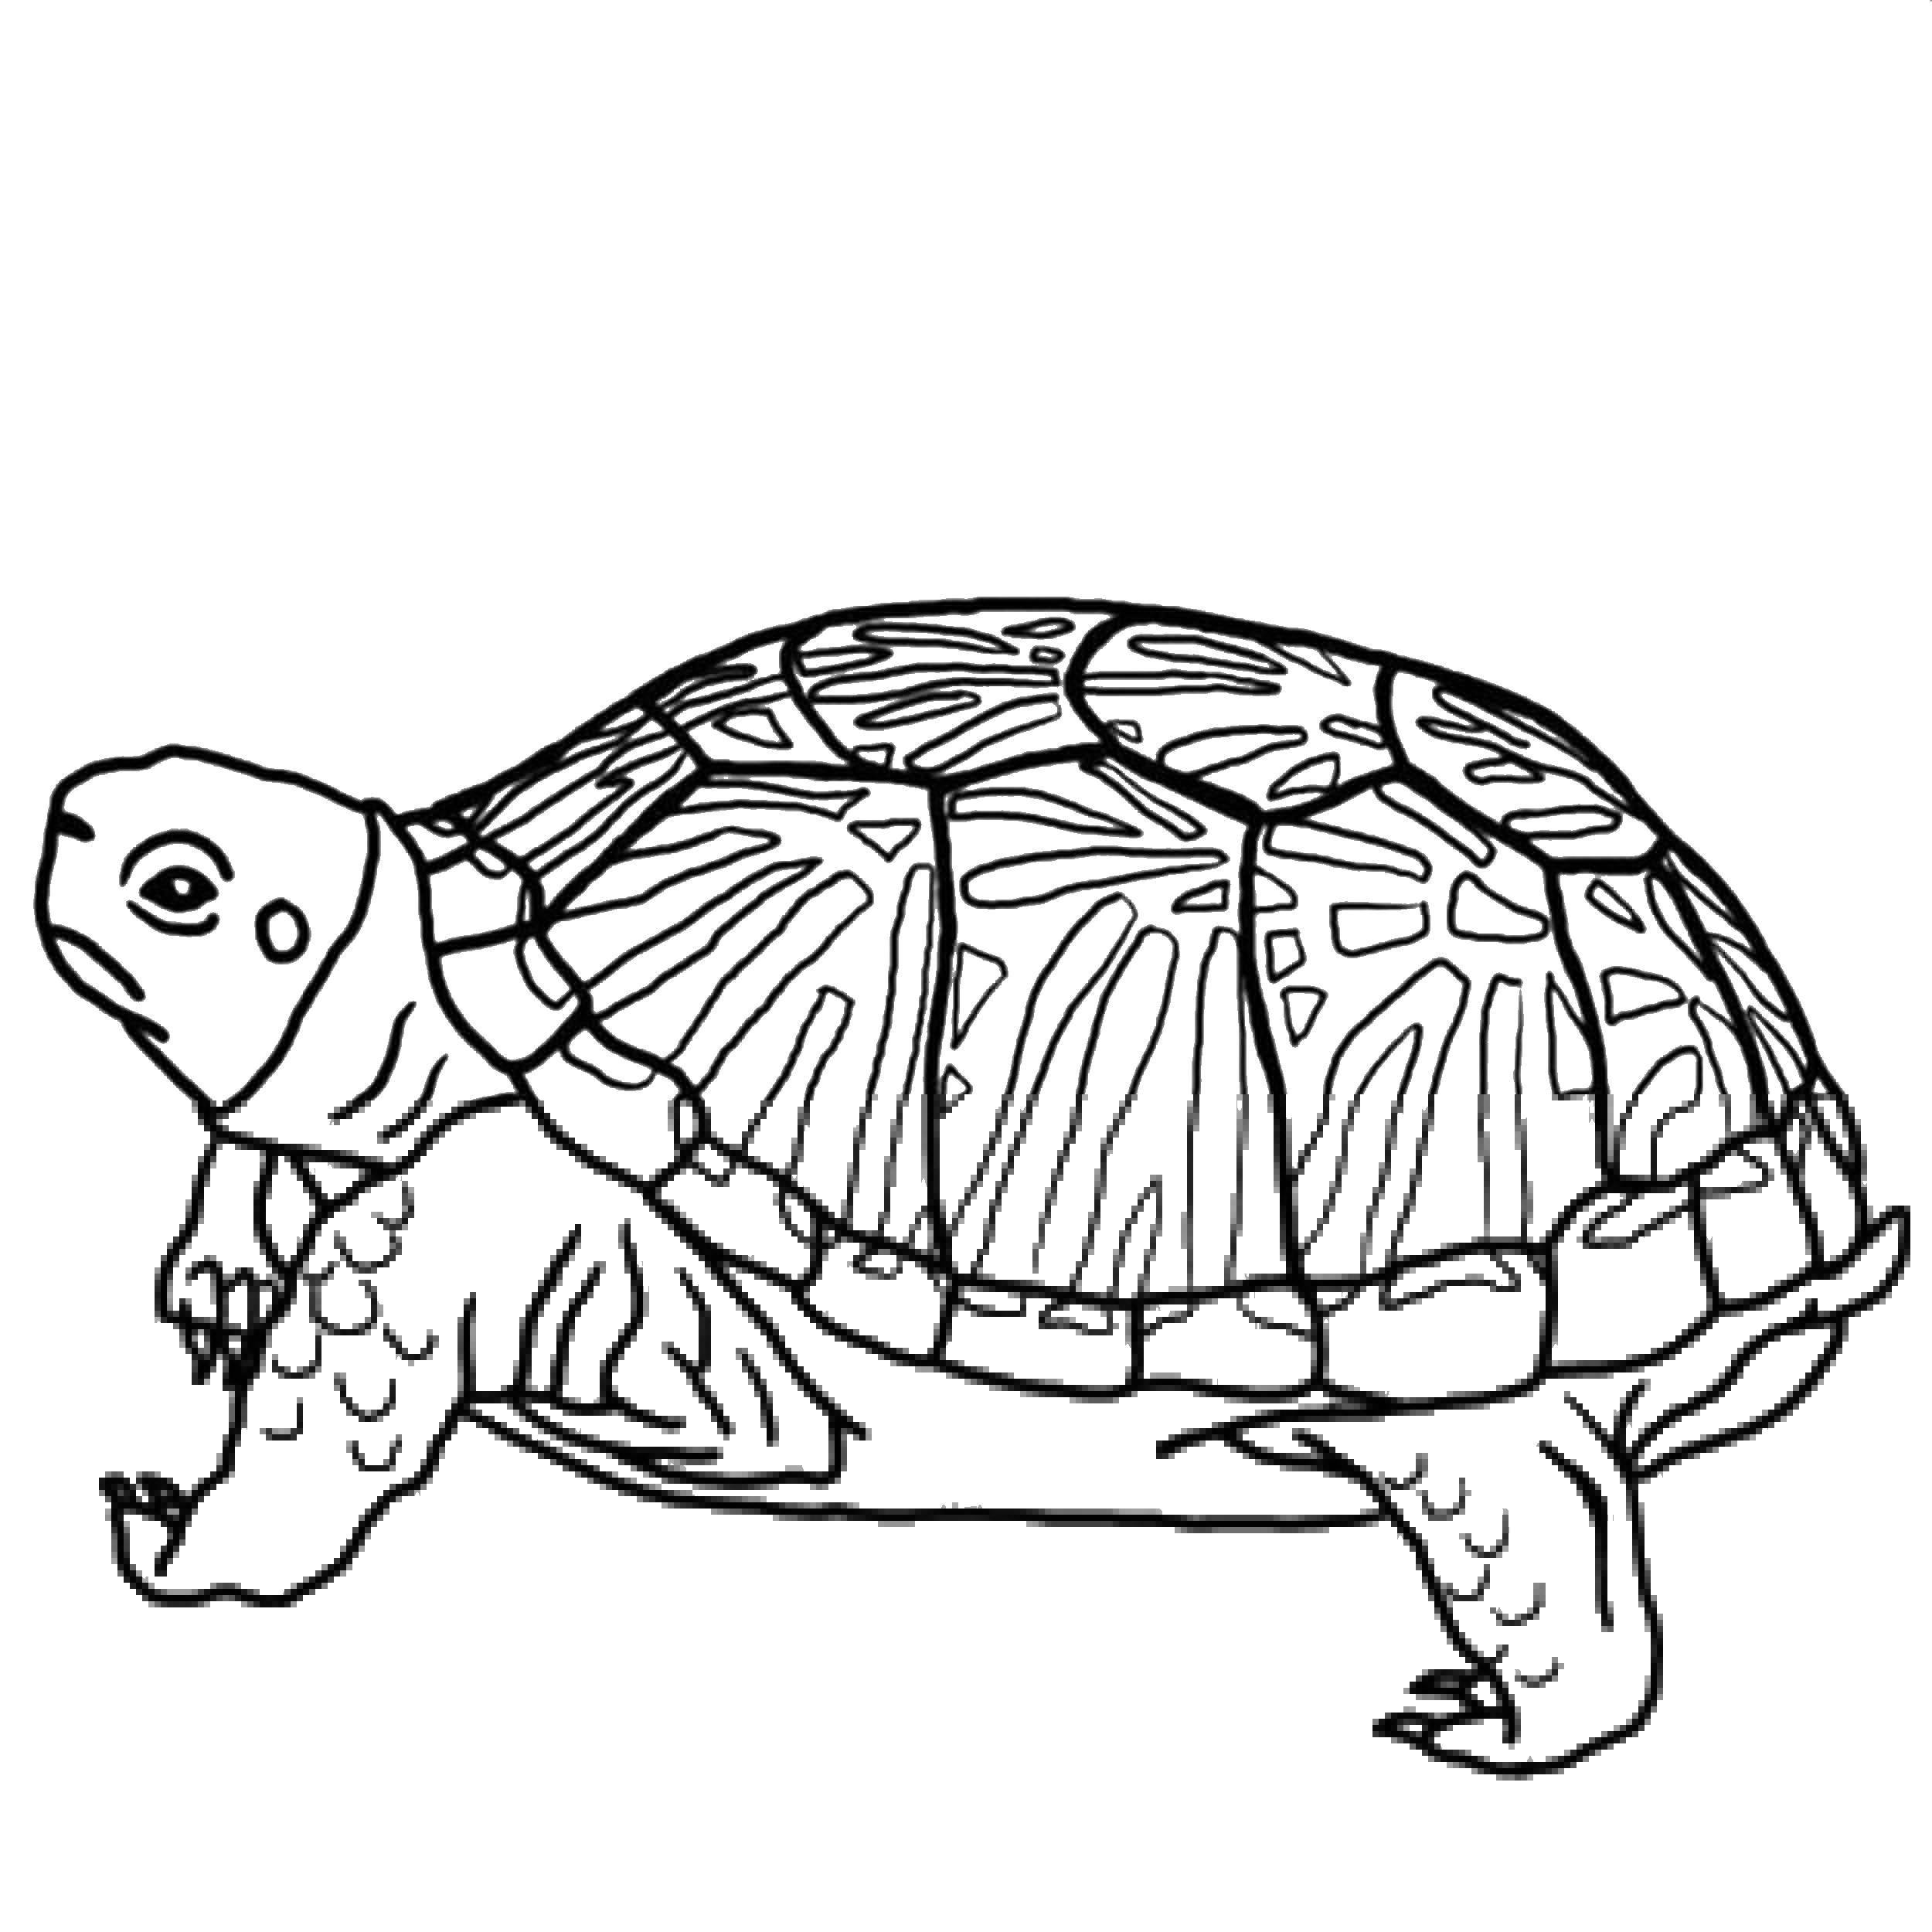 Coloring Sea turtle. Category coloring. Tags:  turtle , turtle, sea turtle.